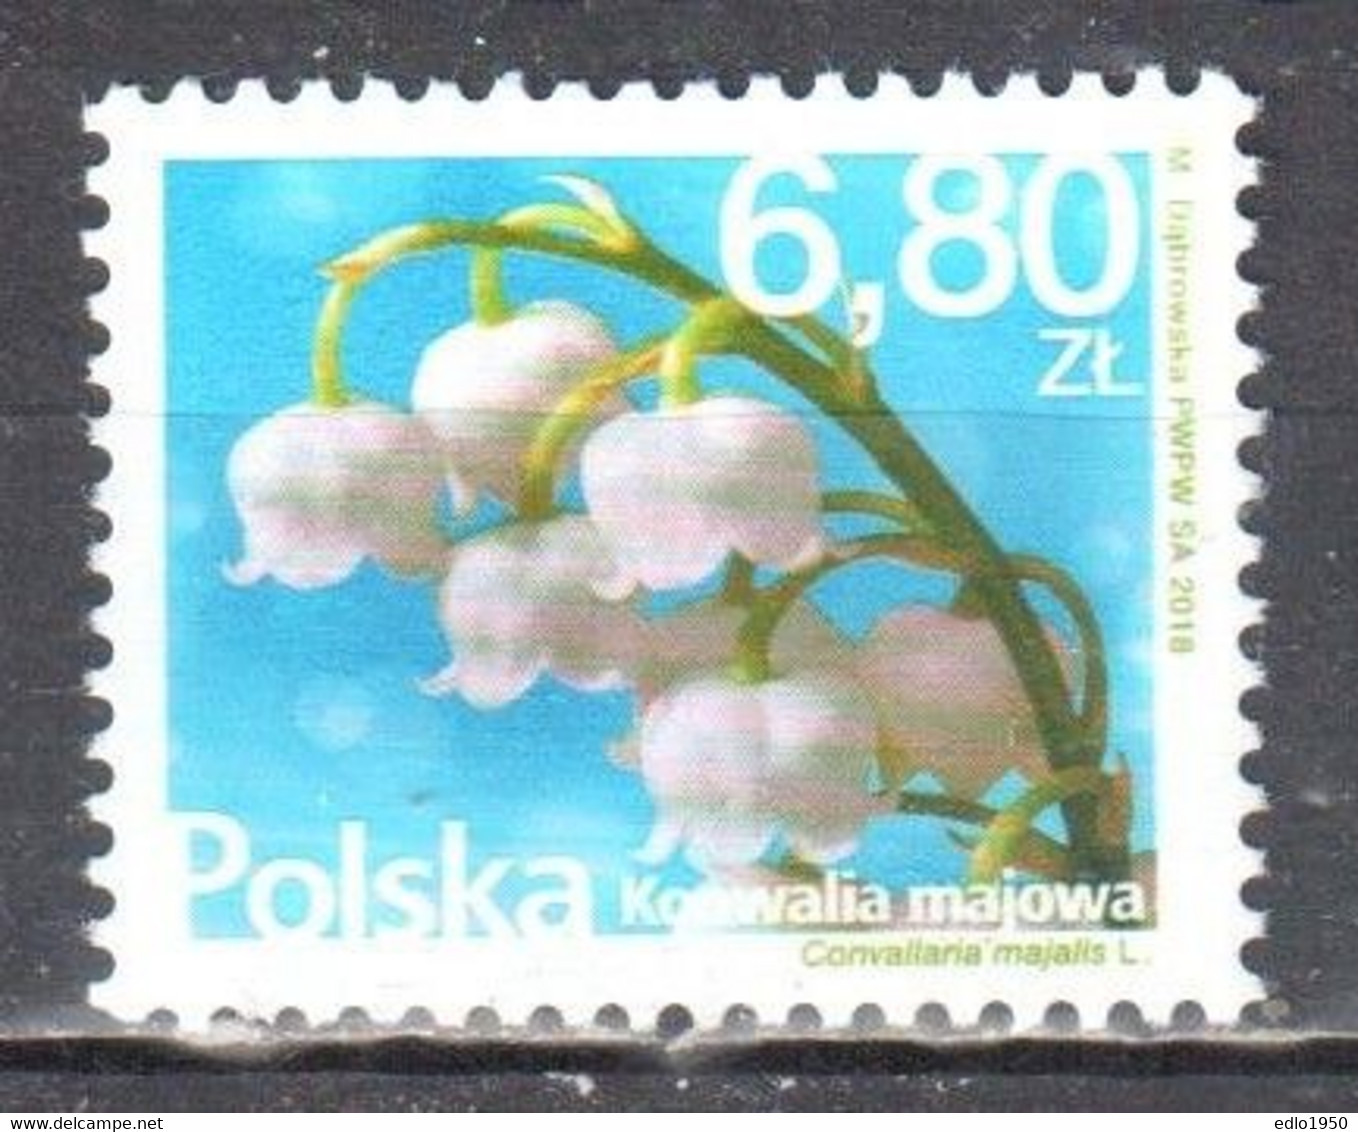 Poland  2018 - Flowers And Fruits - Mi.4989 - MNH (**) - Nuevos